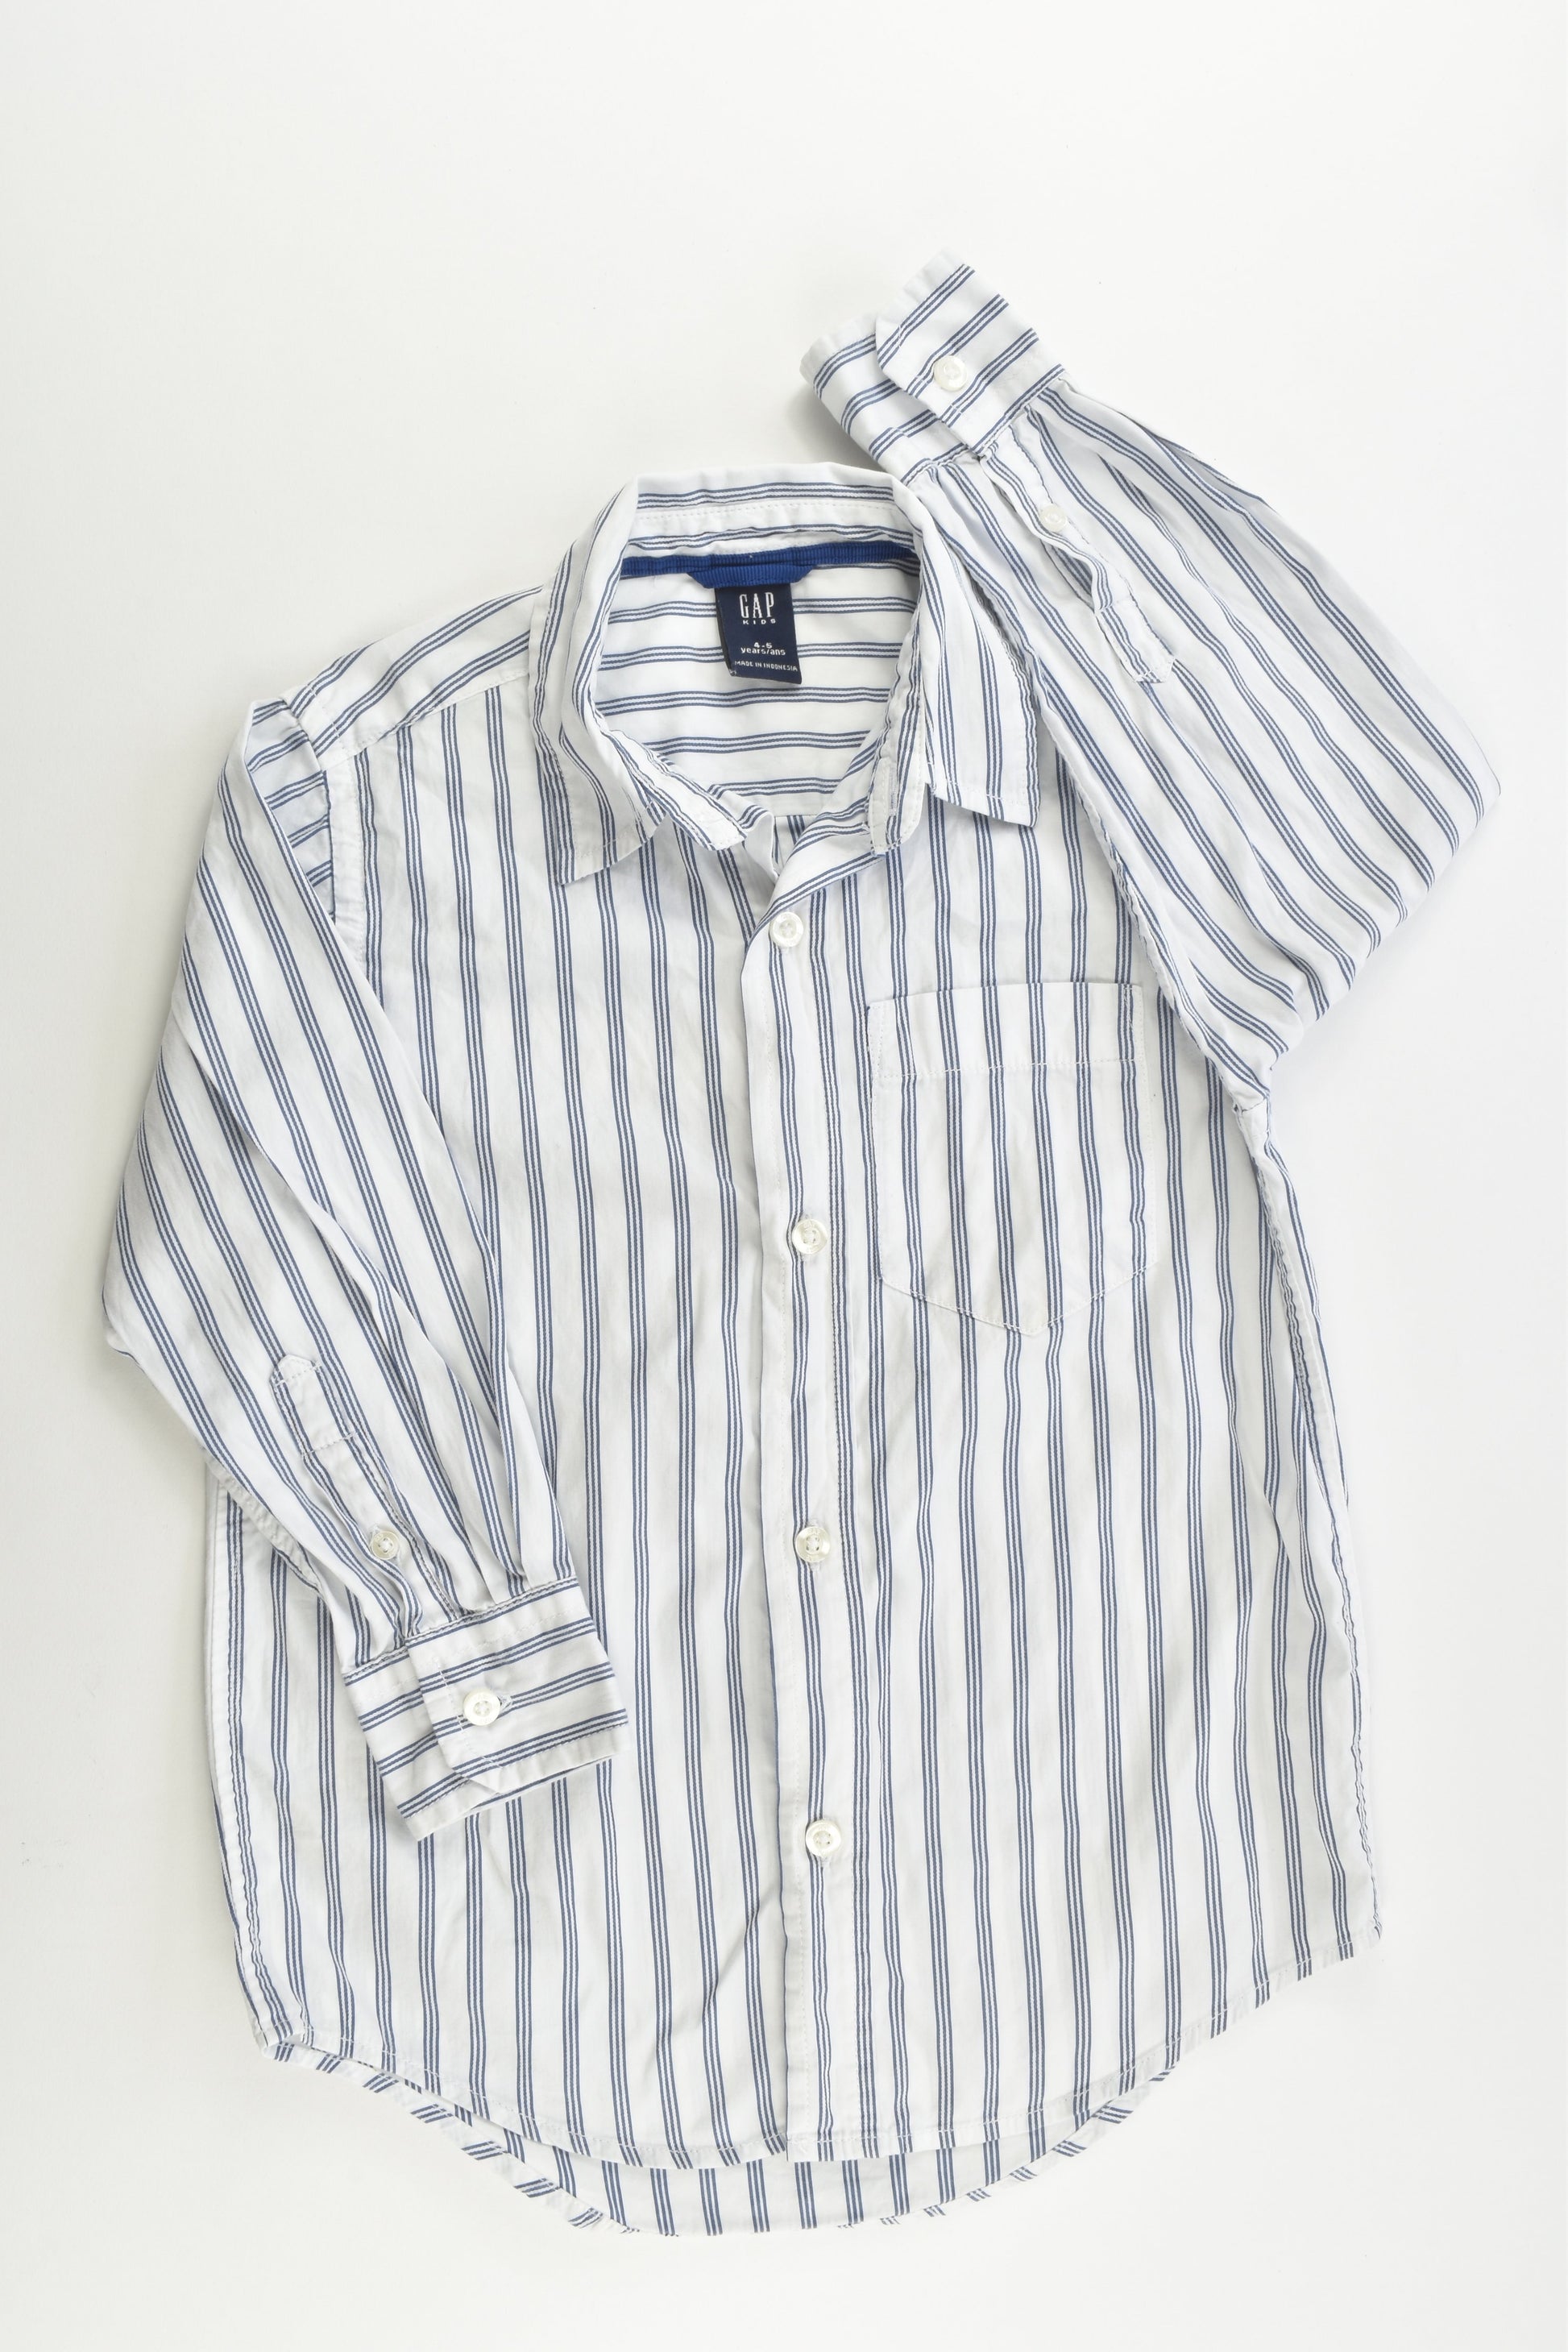 Gap Kids Size 4-5 Striped Collared Shirt